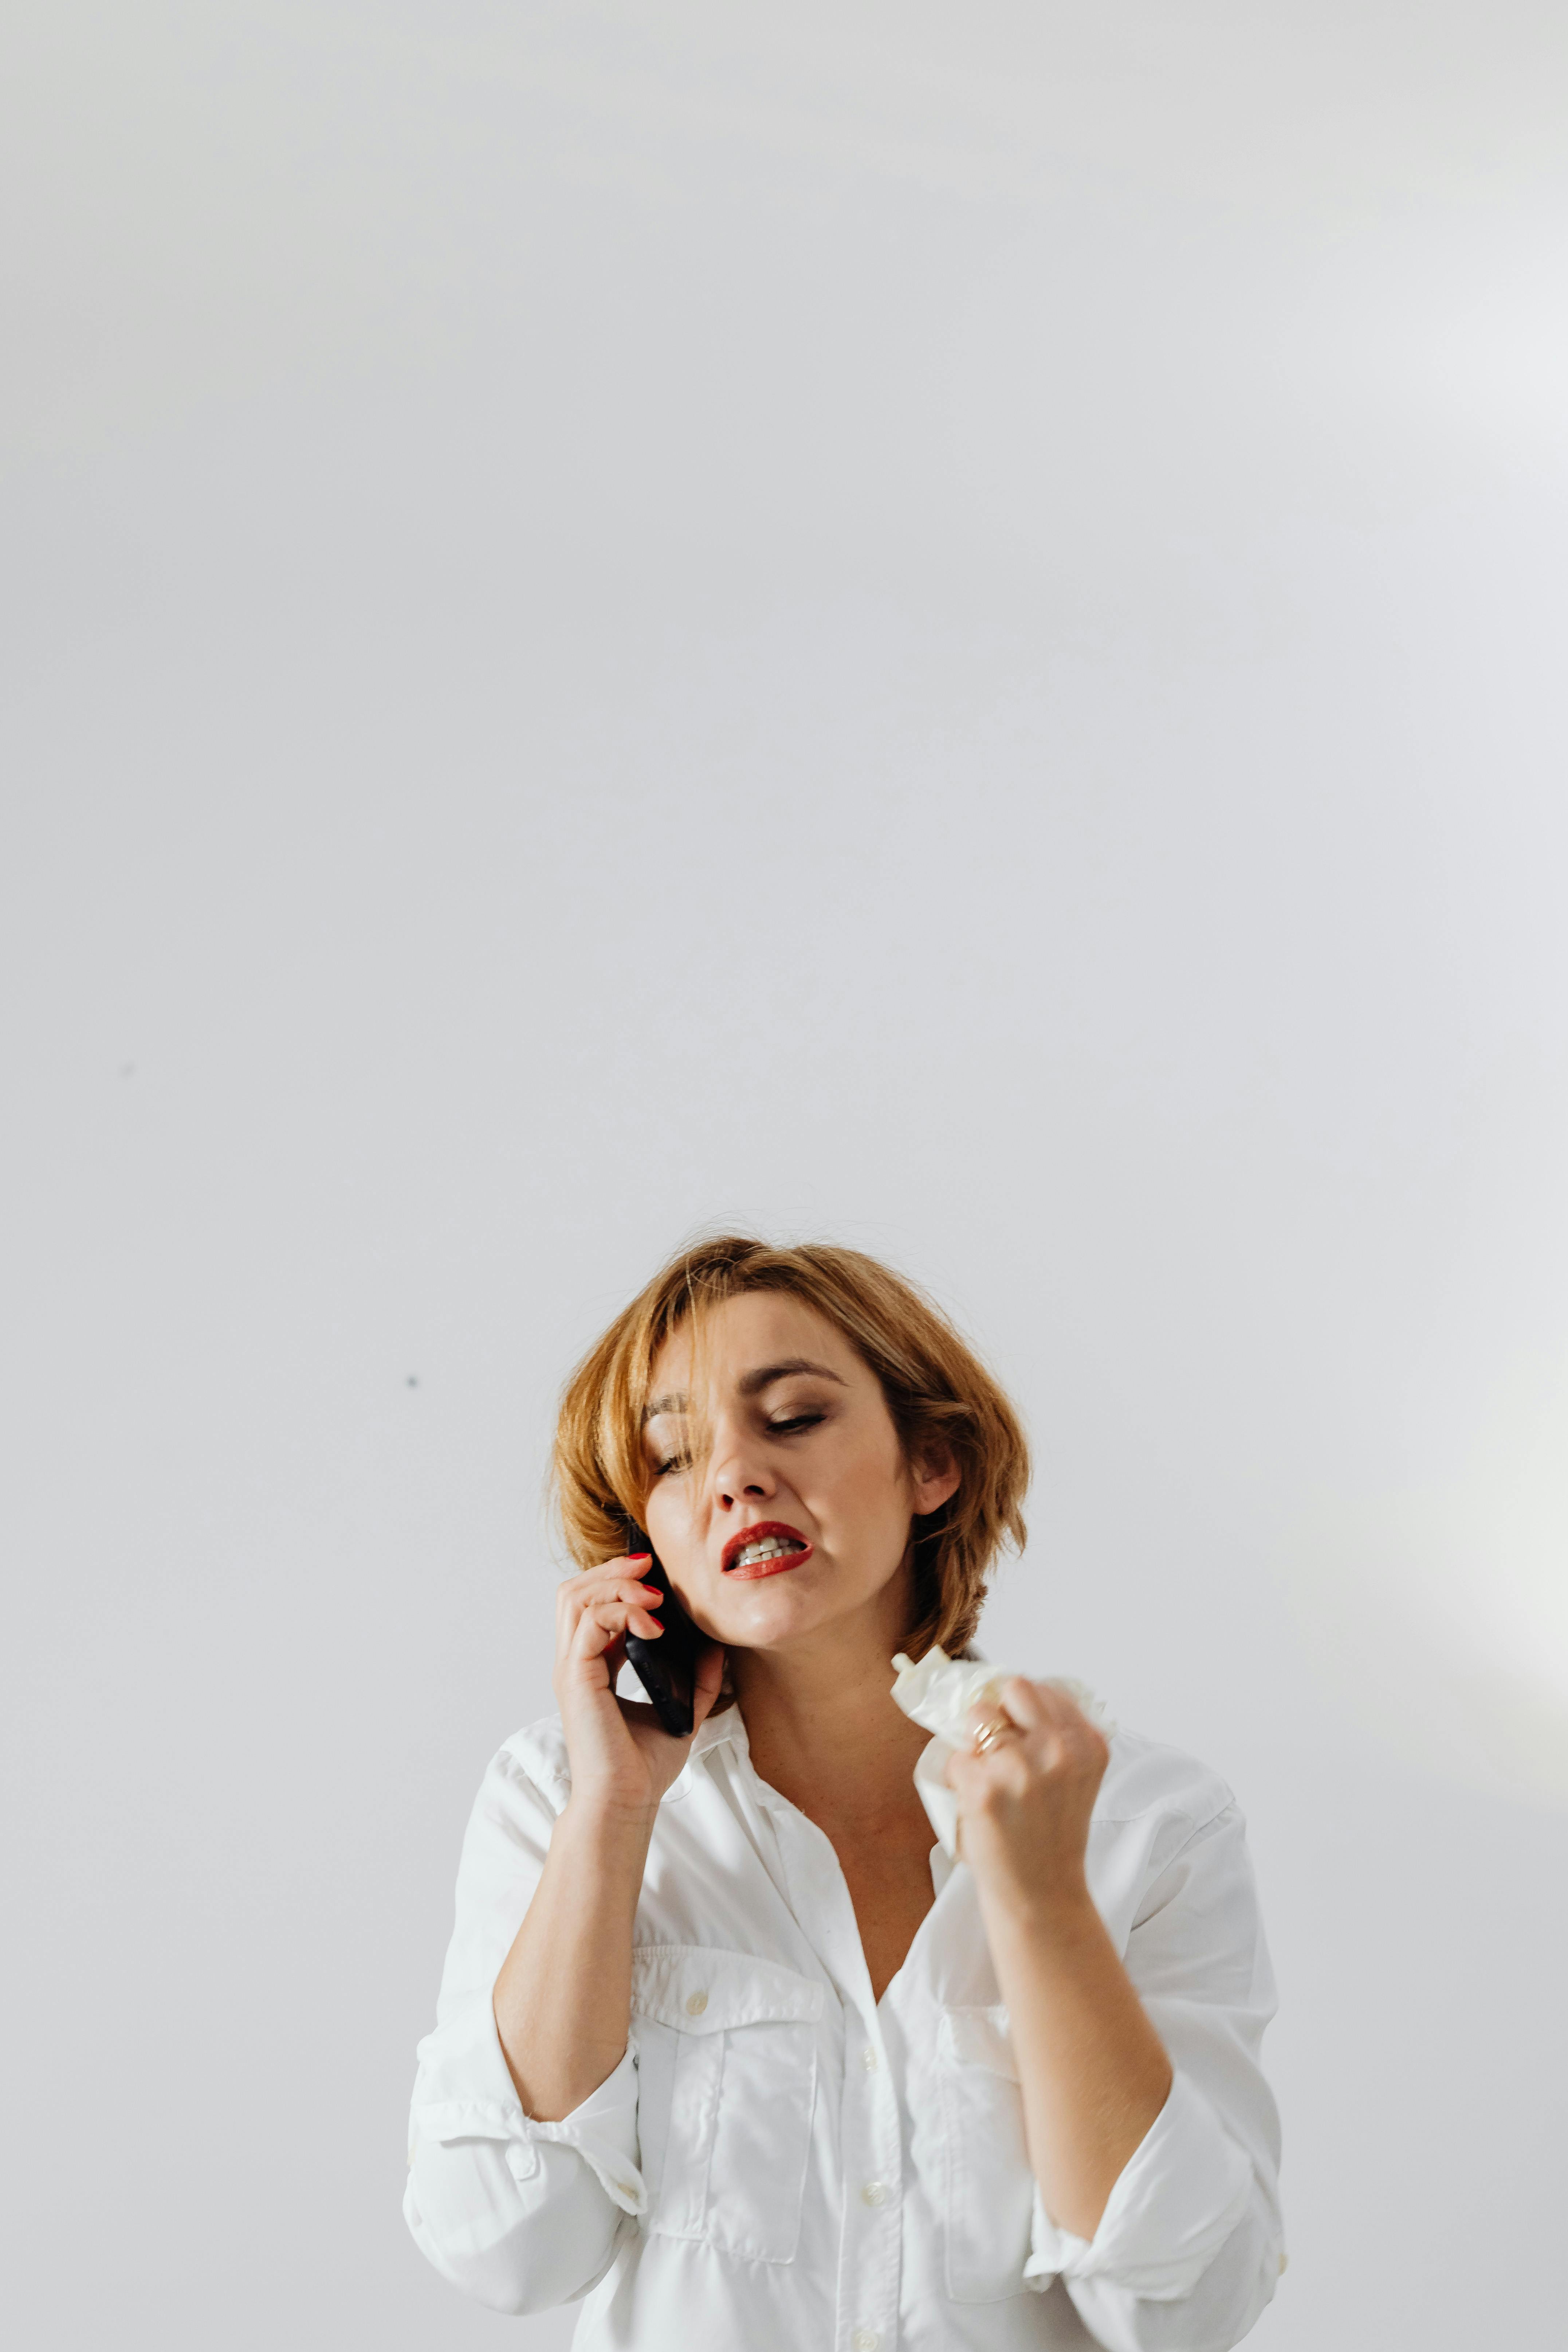 Irritated woman talks on the phone | Source: Pexels